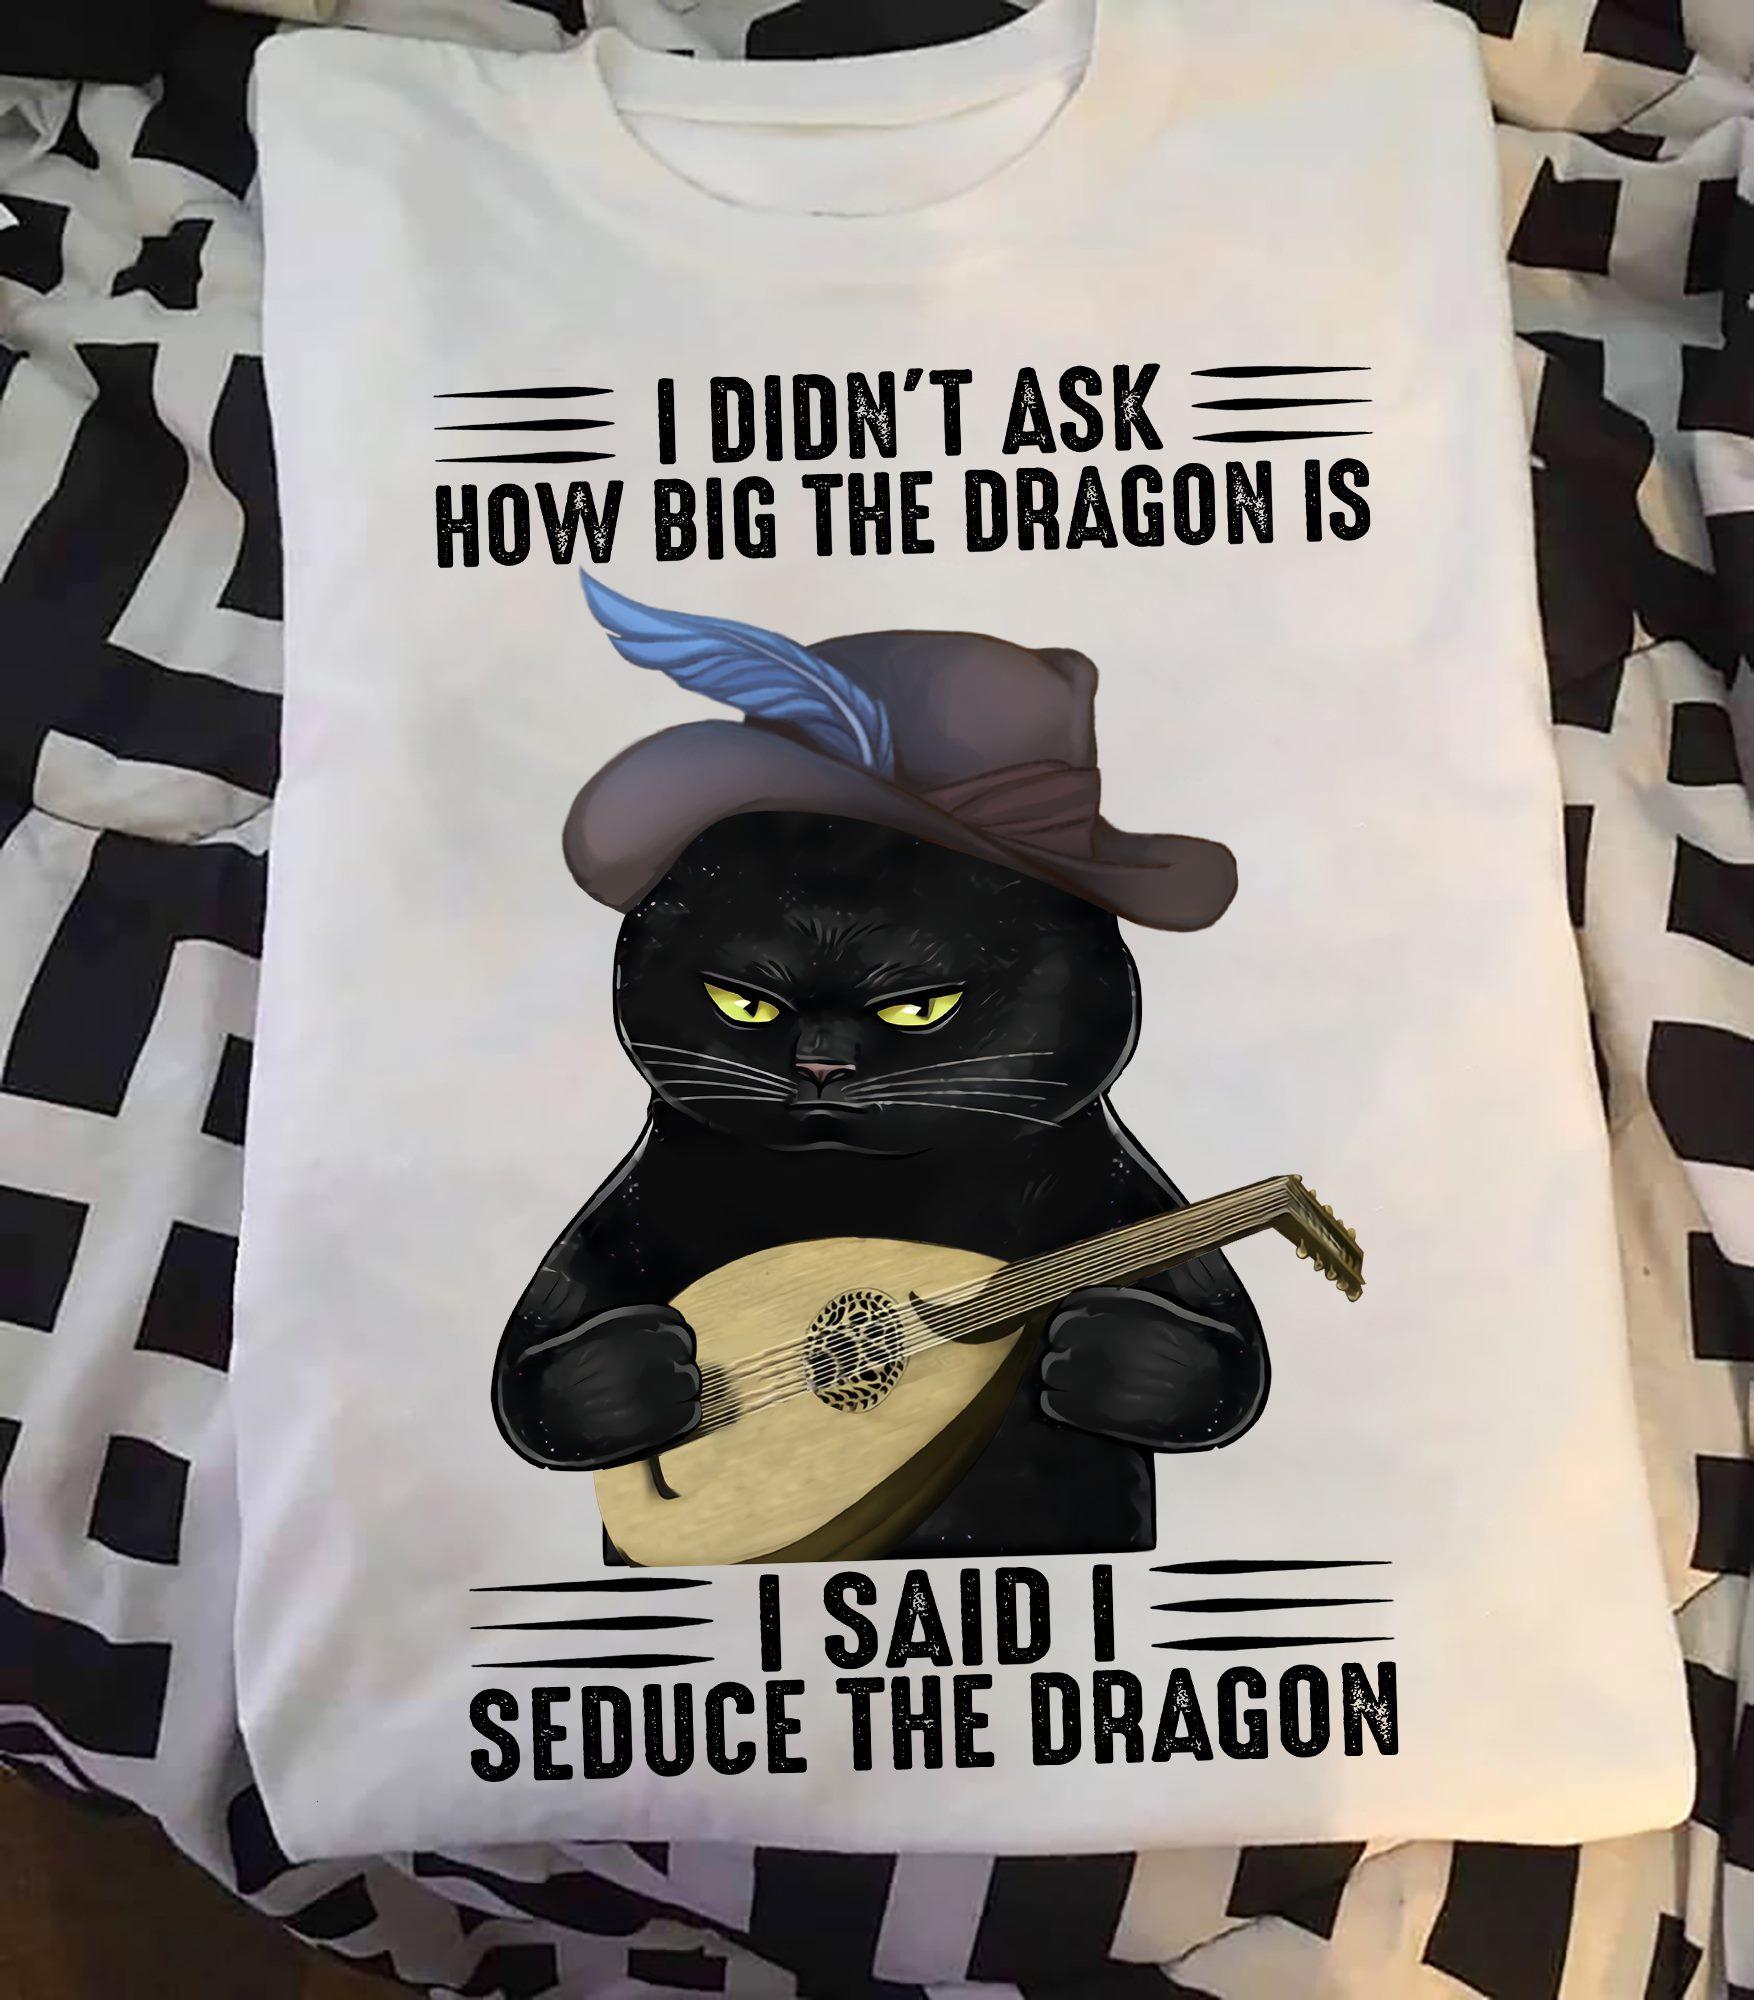 Black Cat Play Turkish Oud - I didn't ask how big the dragon is i said i seduce the dragon